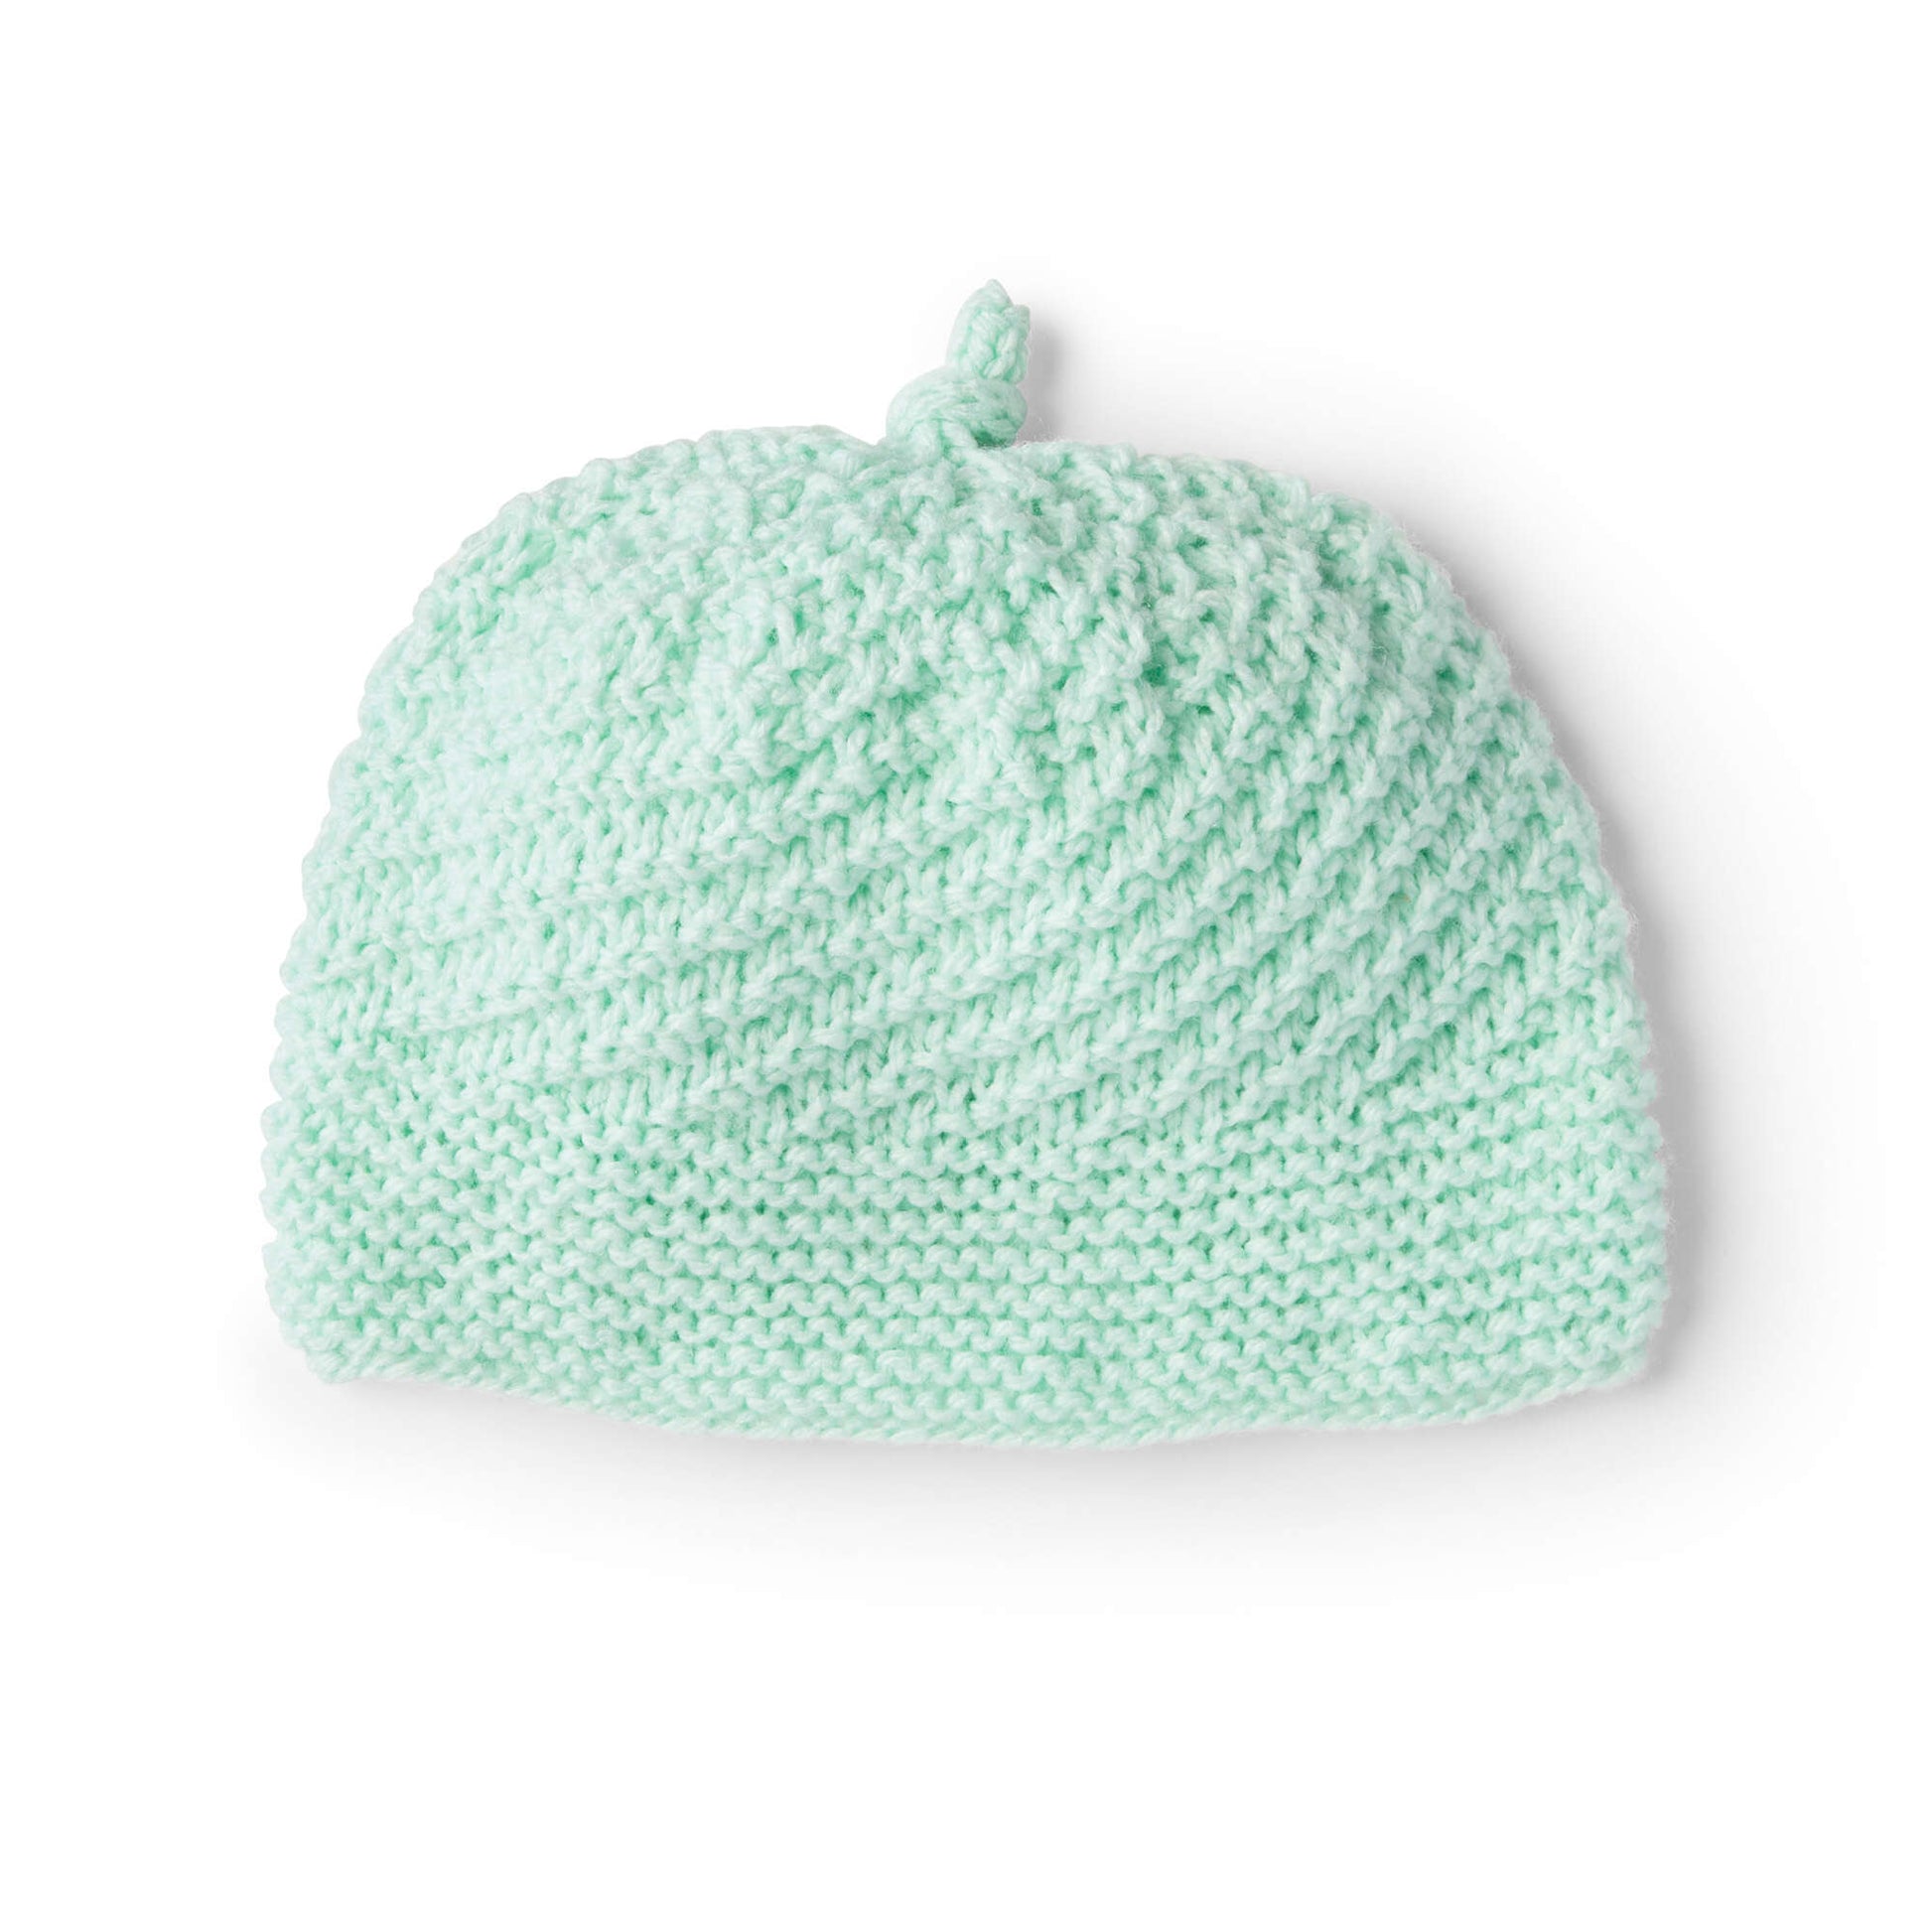 Free Bernat Stay Warm Knit Baby Hat Pattern